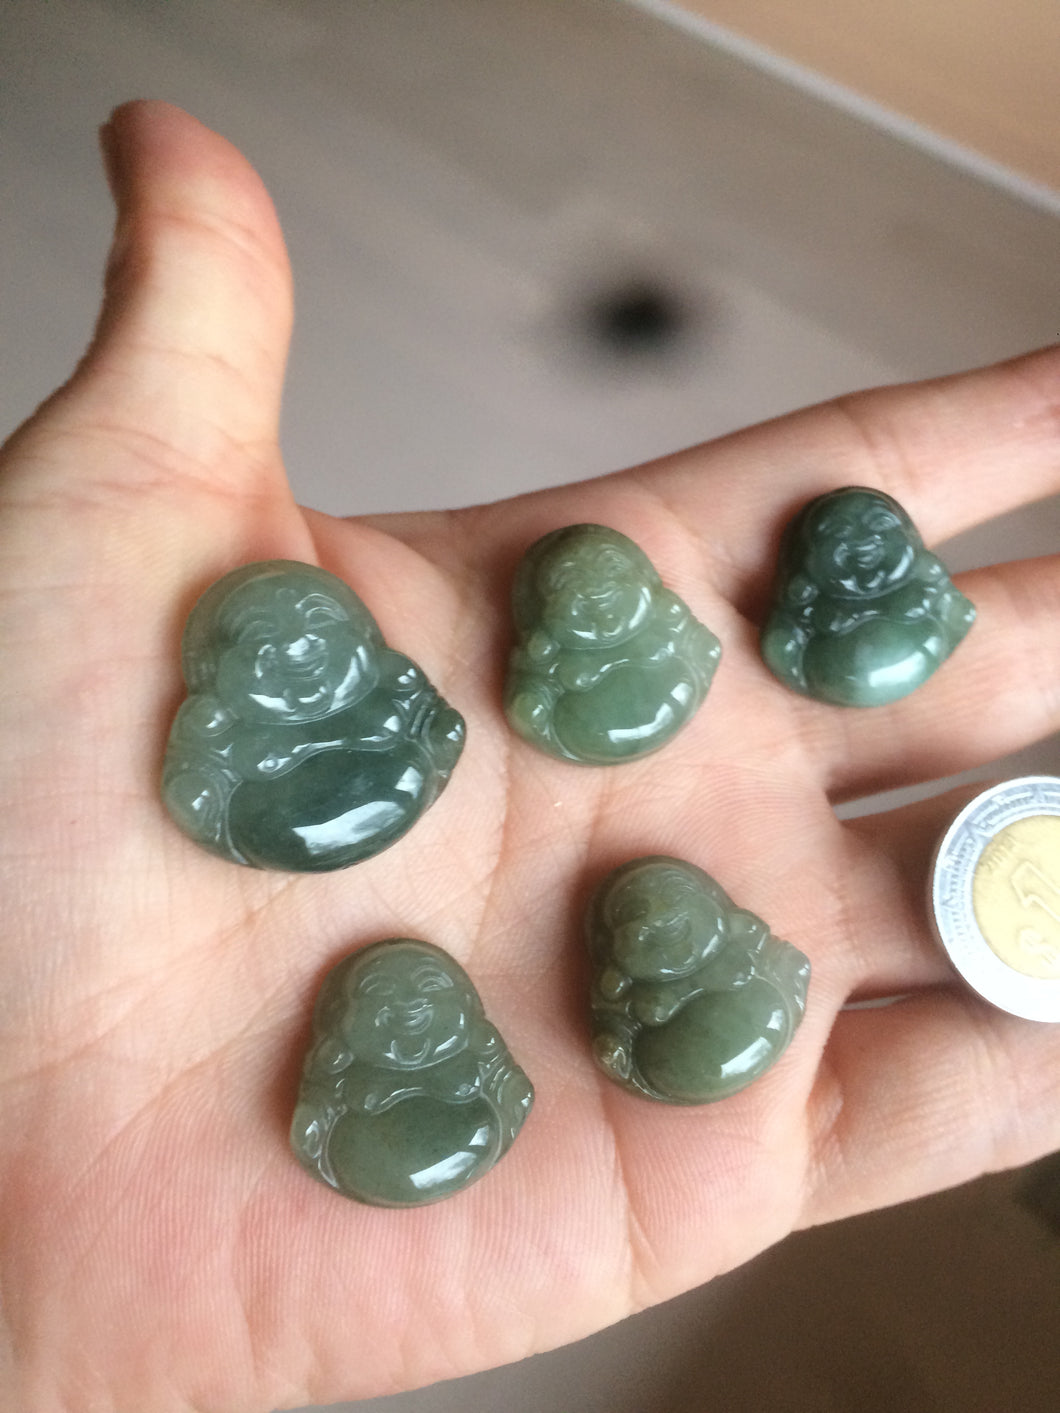 100% Natural type A oily dark green/gray/black small happy buddha jadeite Jade pendant necklace AQ52 add on item